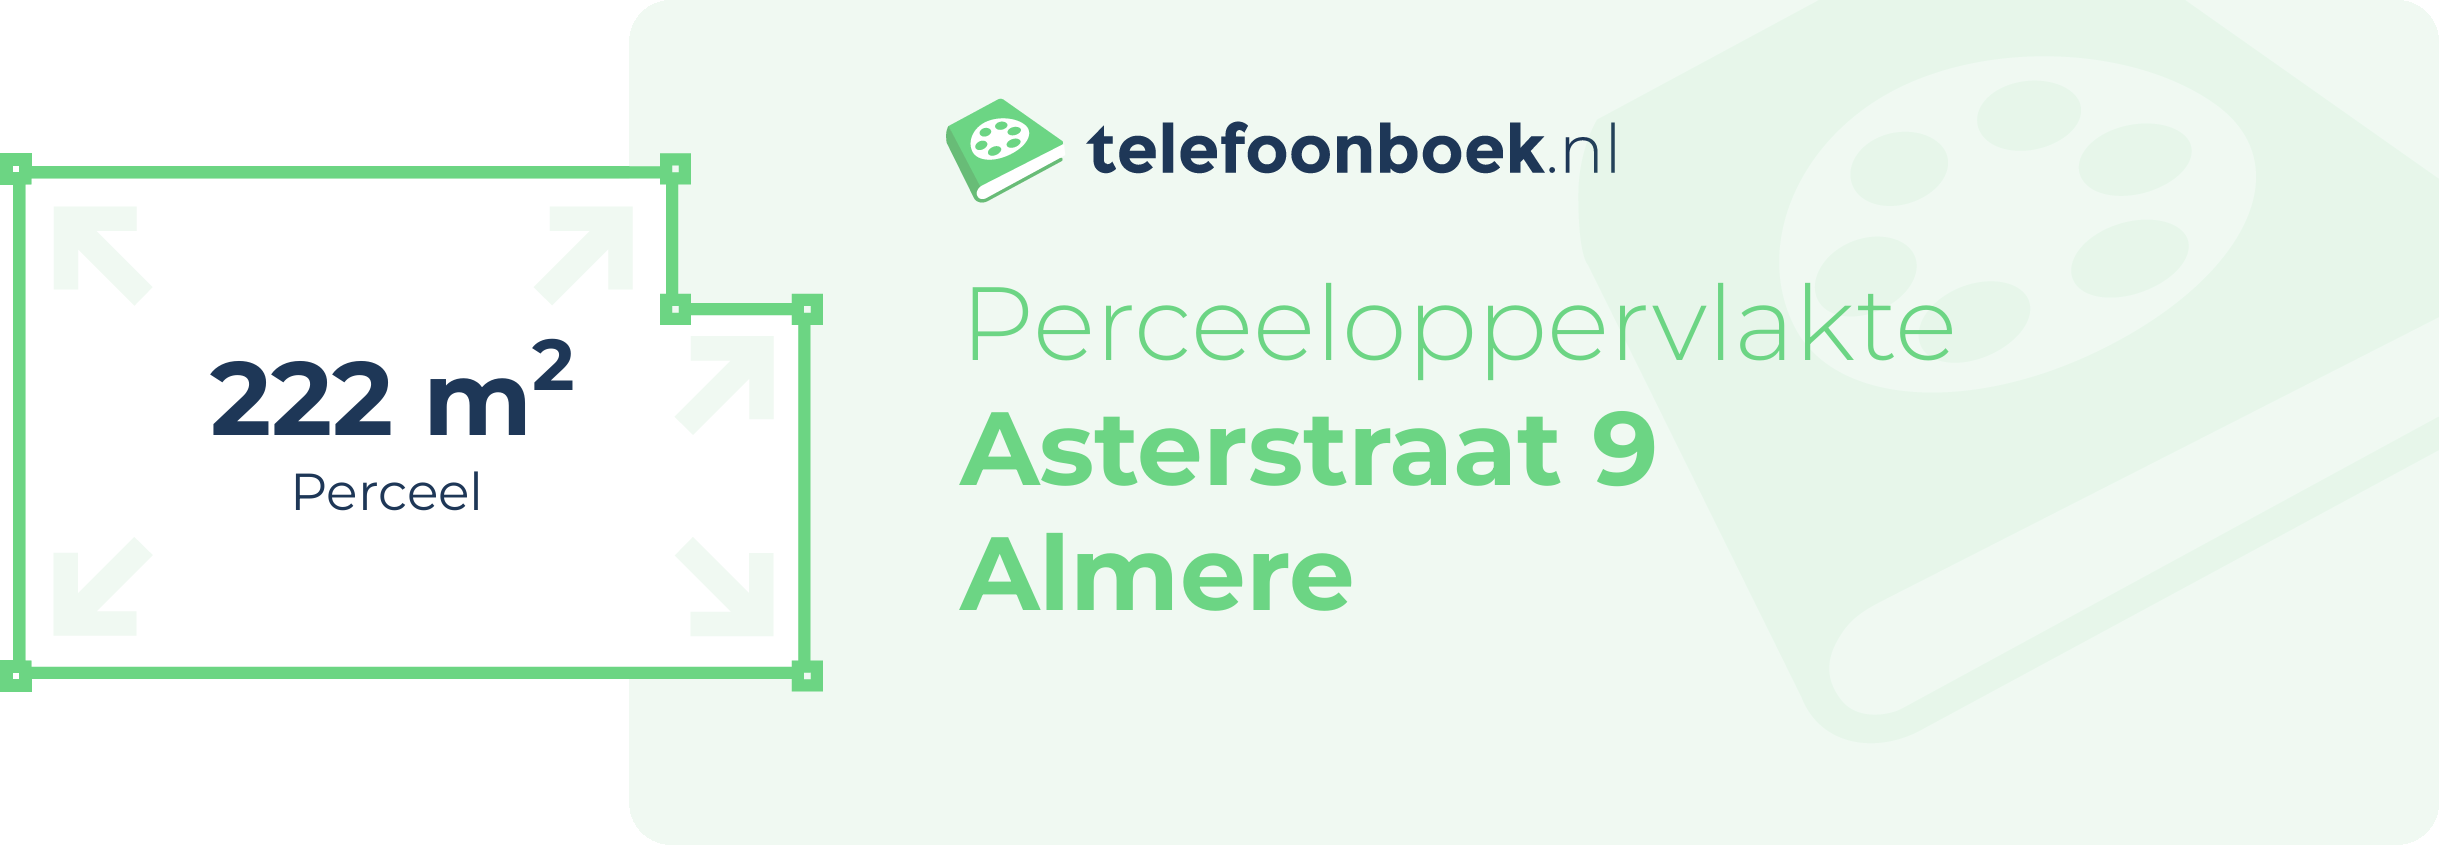 Perceeloppervlakte Asterstraat 9 Almere